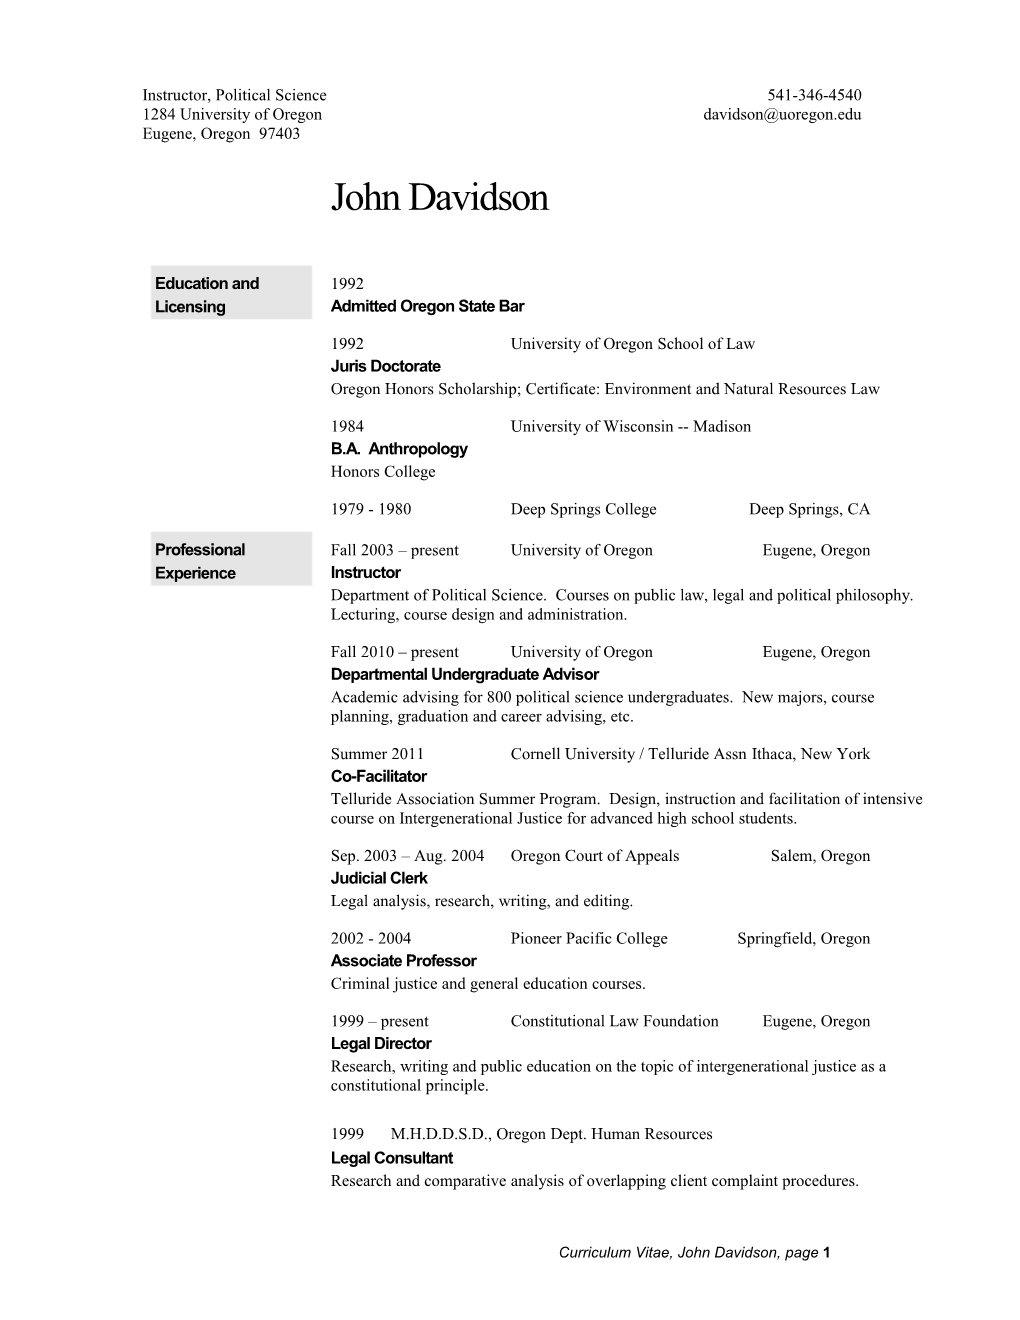 Curriculum Vitae, John Davidson, Page 1